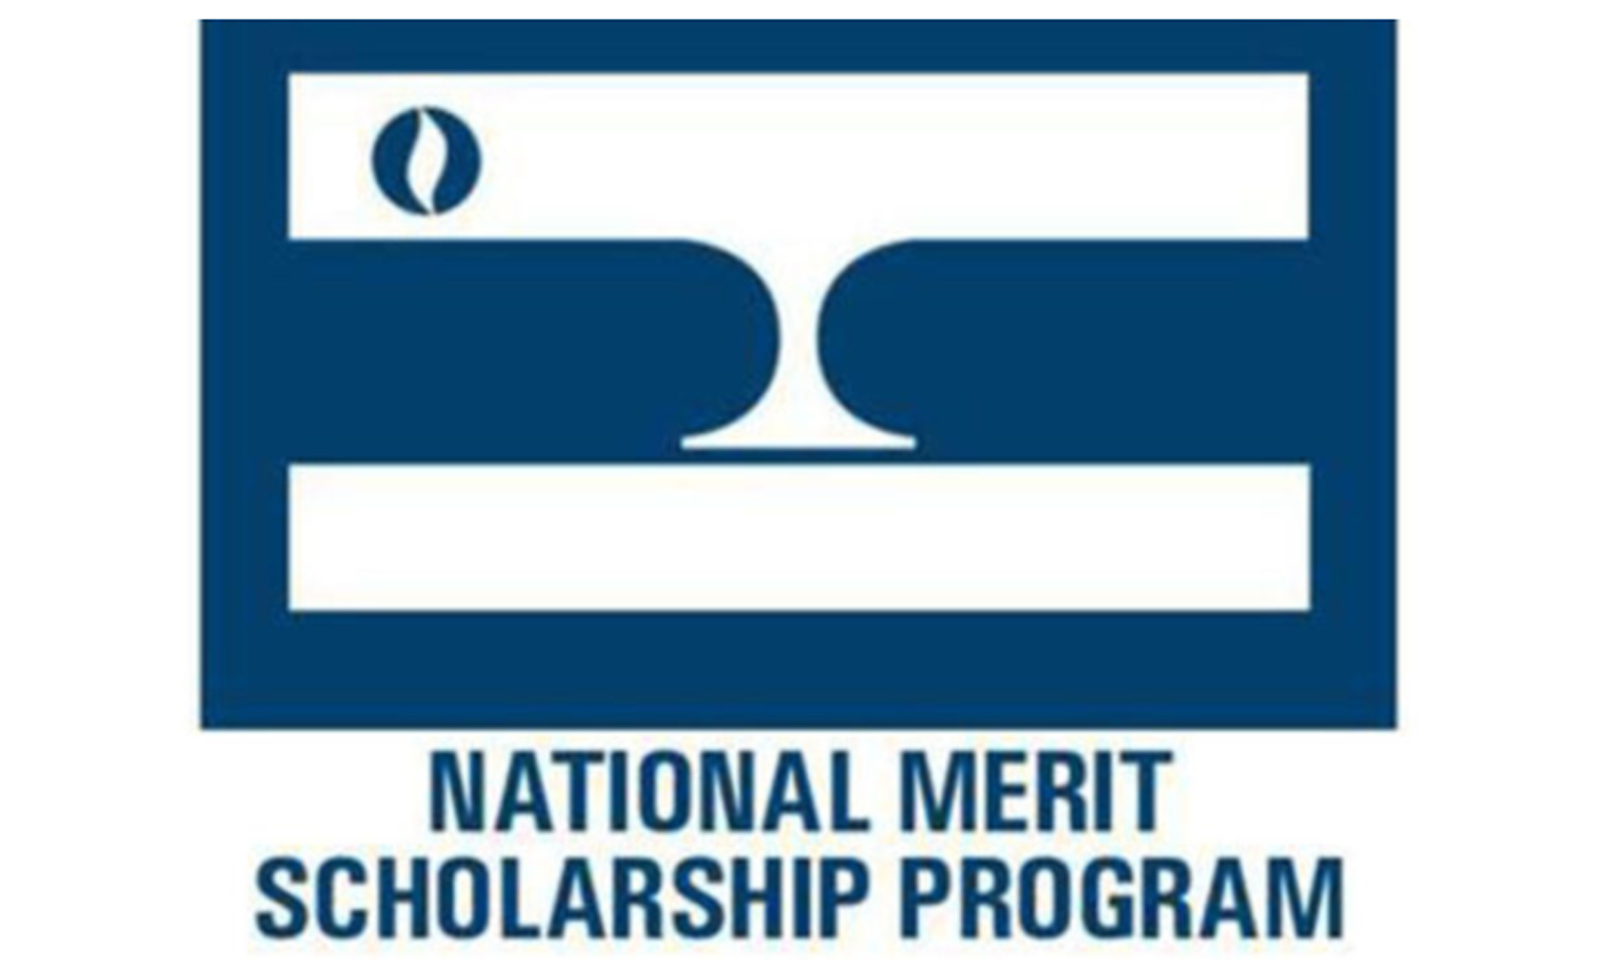 78 up for National Merit Scholarship